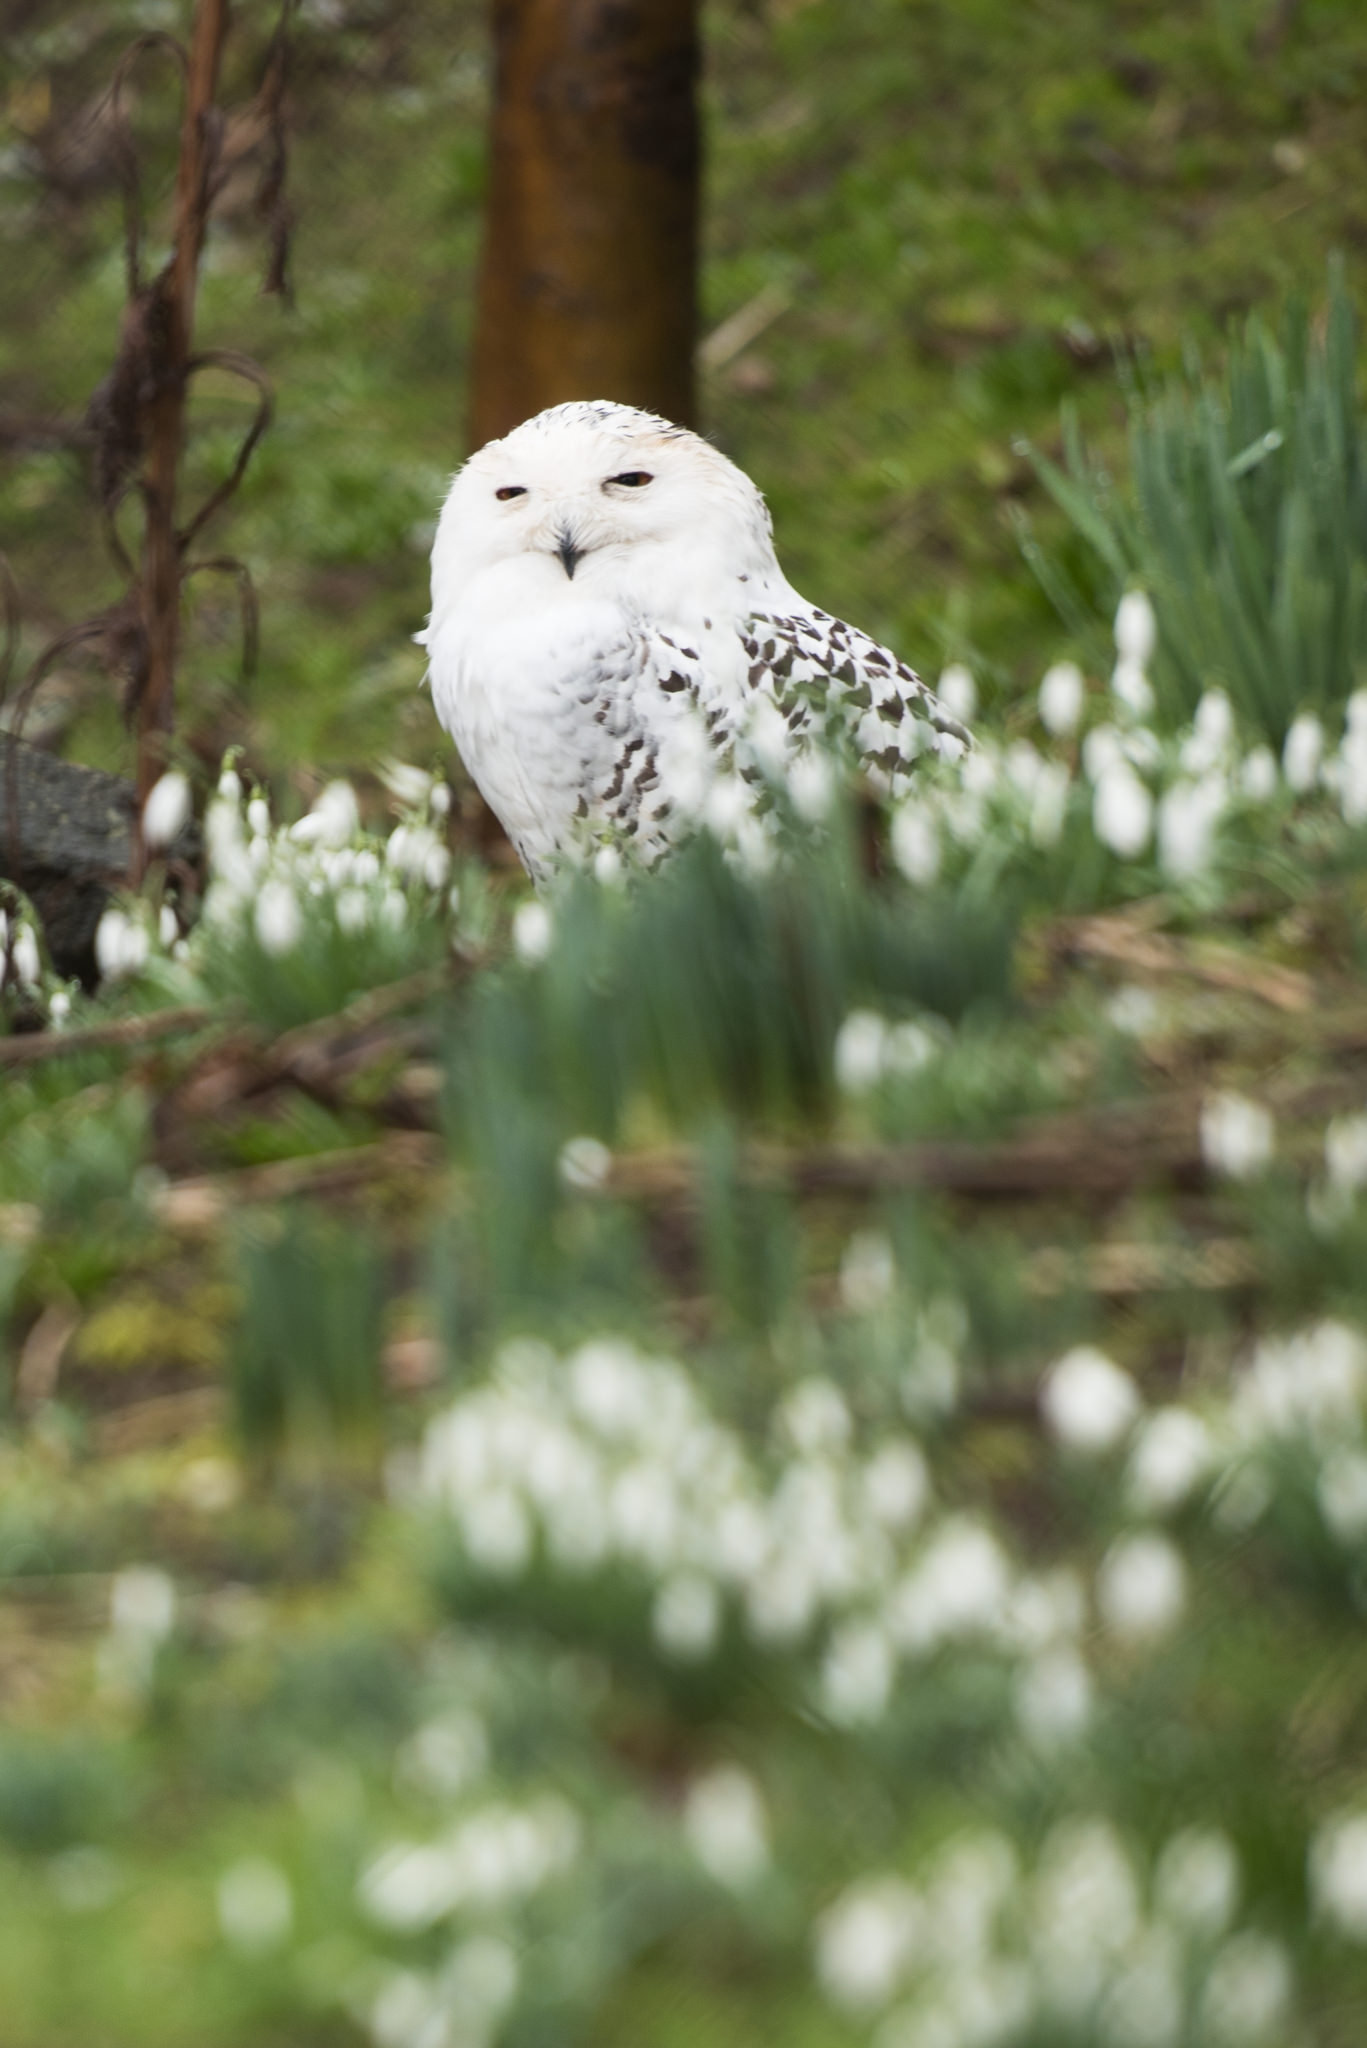 snowy-owl-edinburgh-zoo-3054-web.jpg